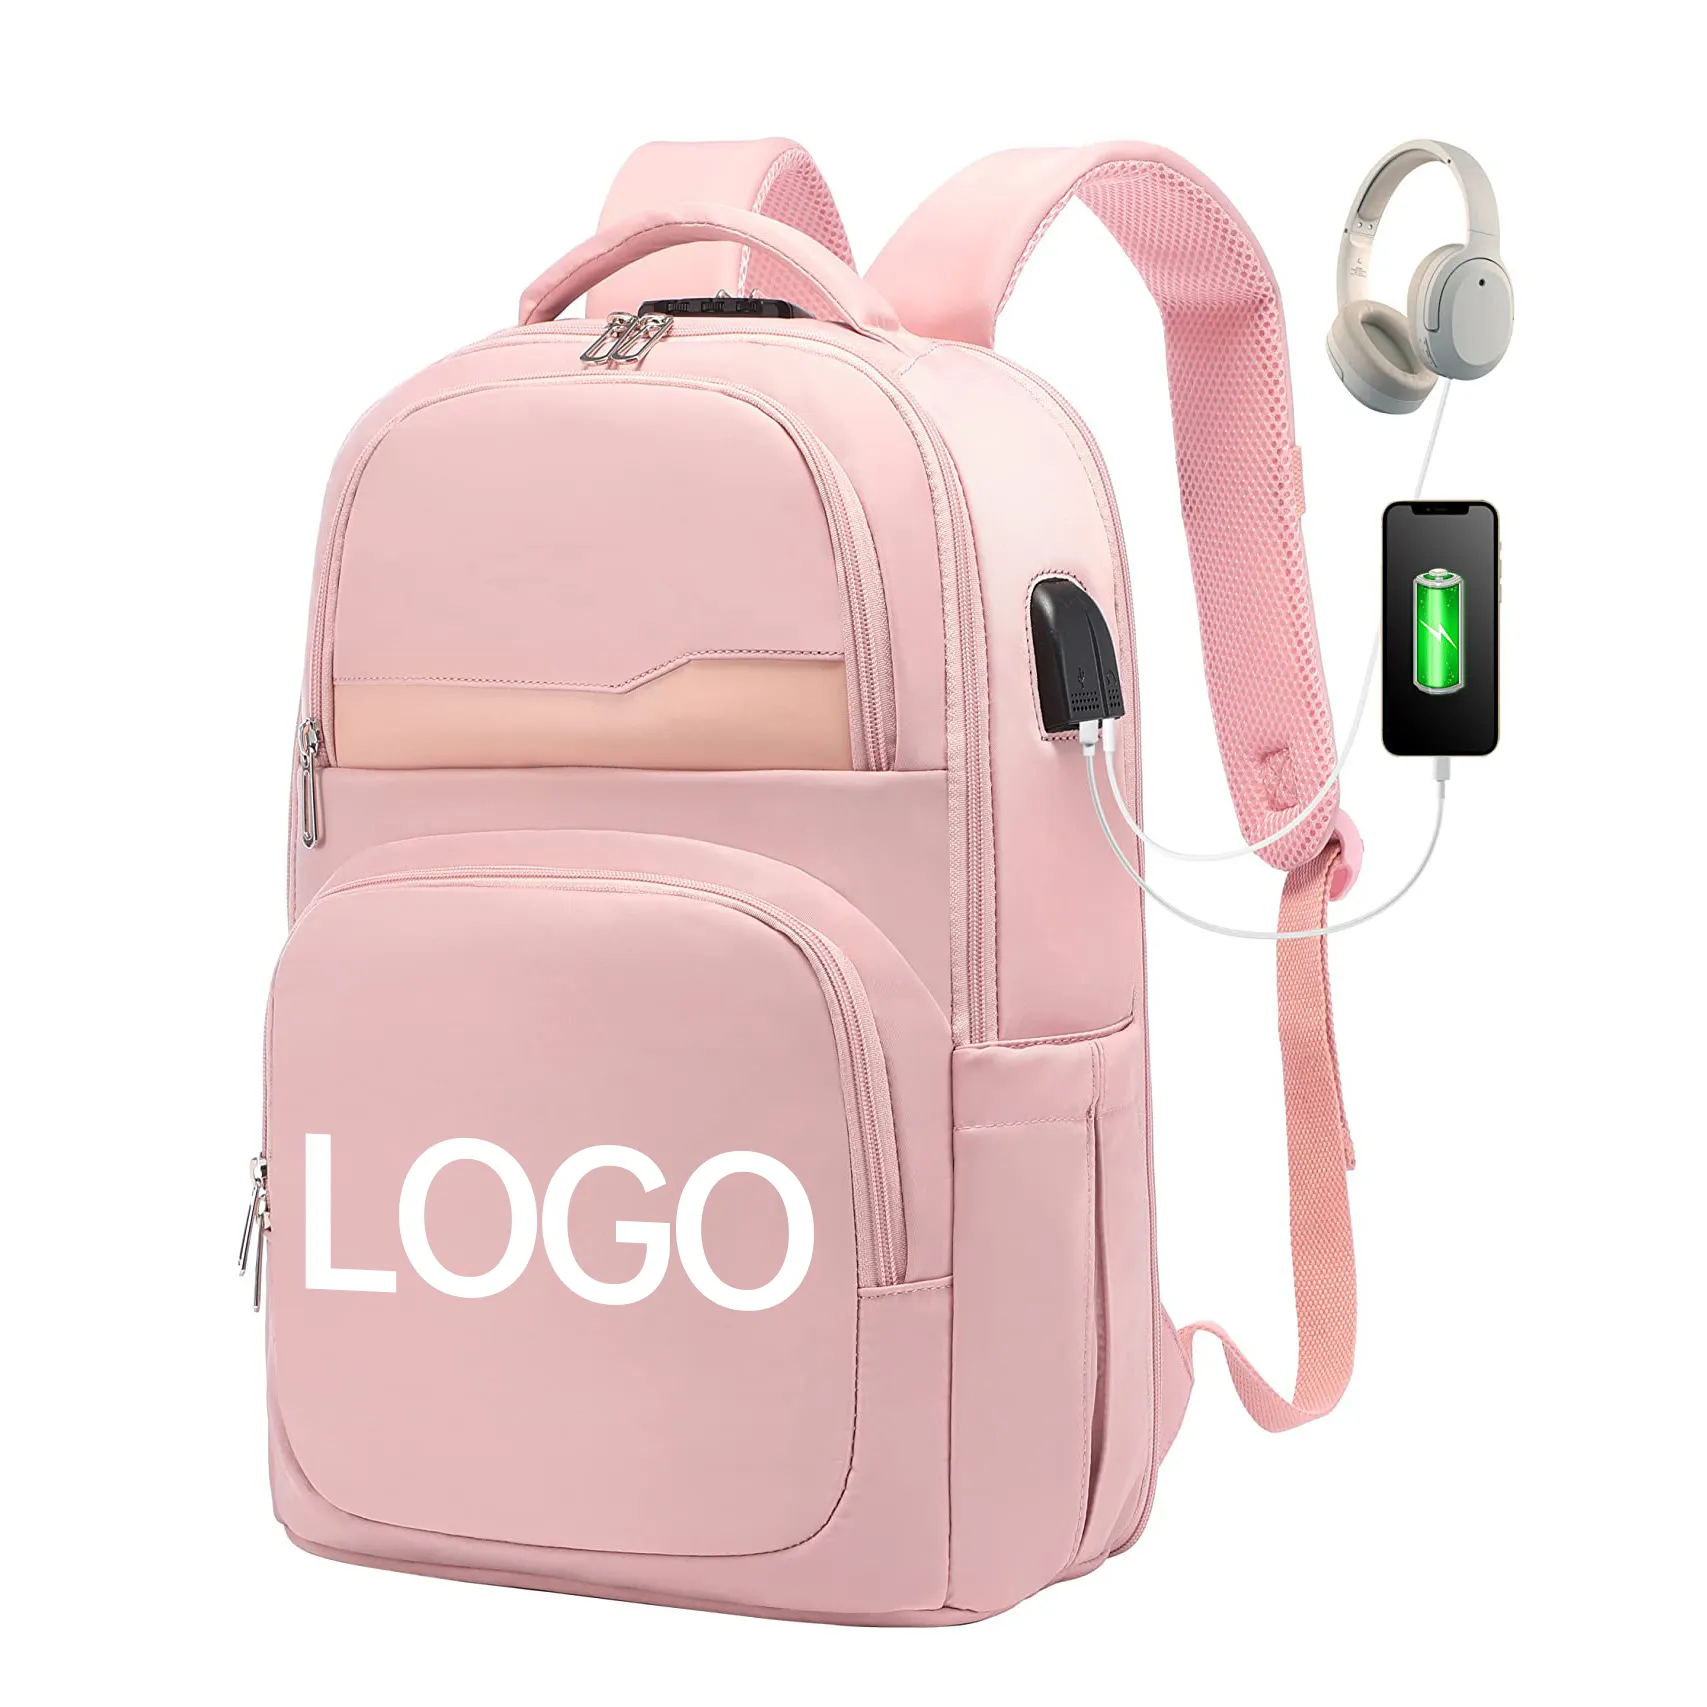 Wholesale OEM Computer Travel Bag Fashion Laptop Back Pack Bags Lightweight Laptop School Backpack Bag For Women